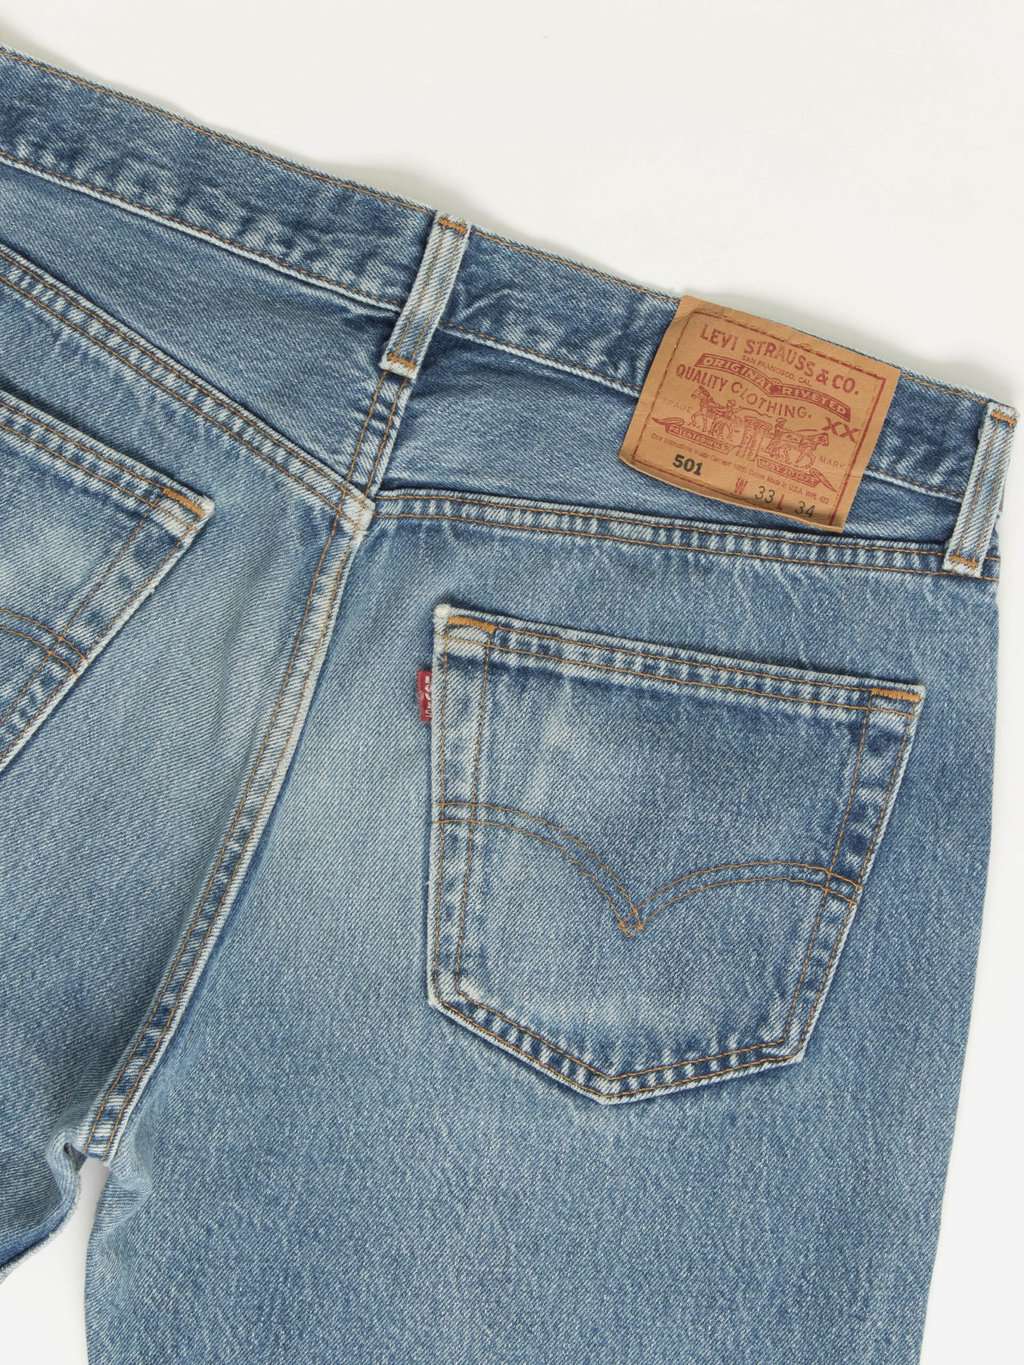 Vintage Levis 501 jeans 32 x 32 blue stonewash USA made 90s